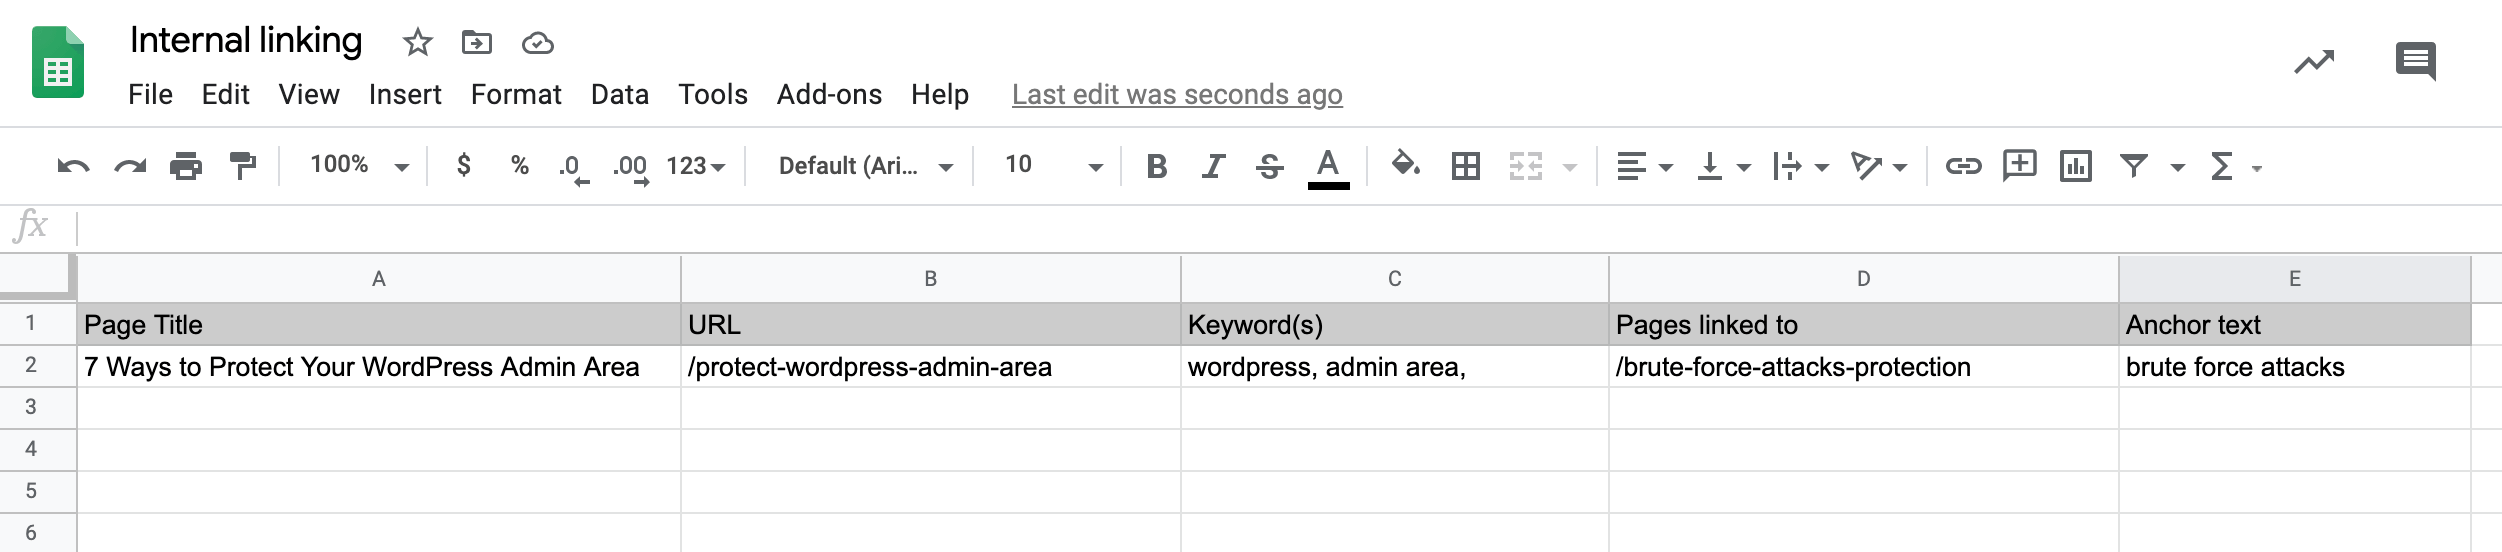 An internal linking spreadsheet created using Google Sheets.